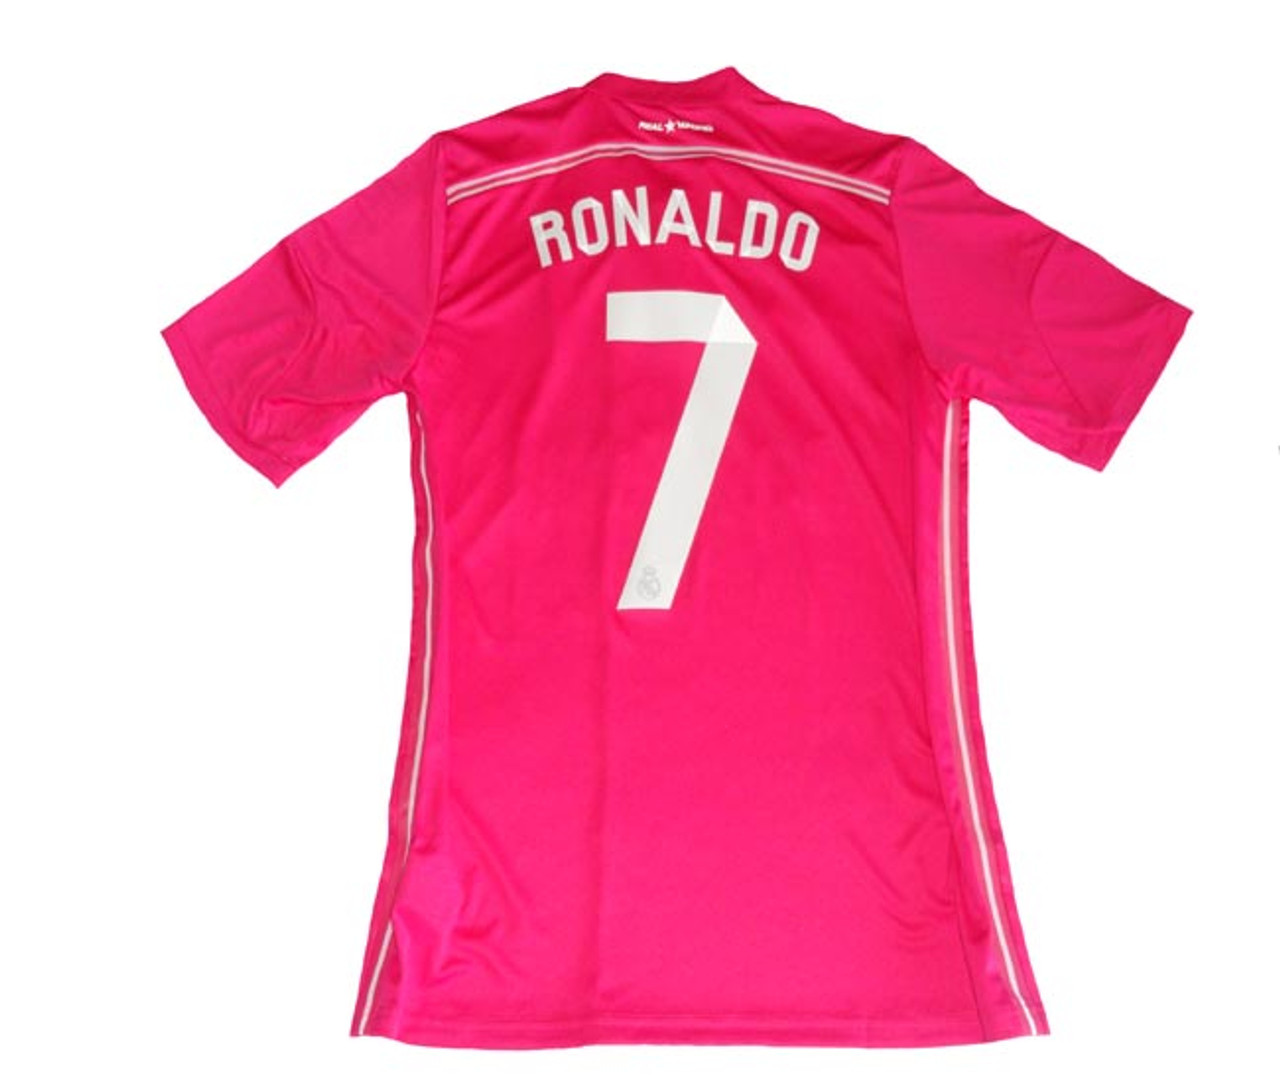 adidas pink jersey